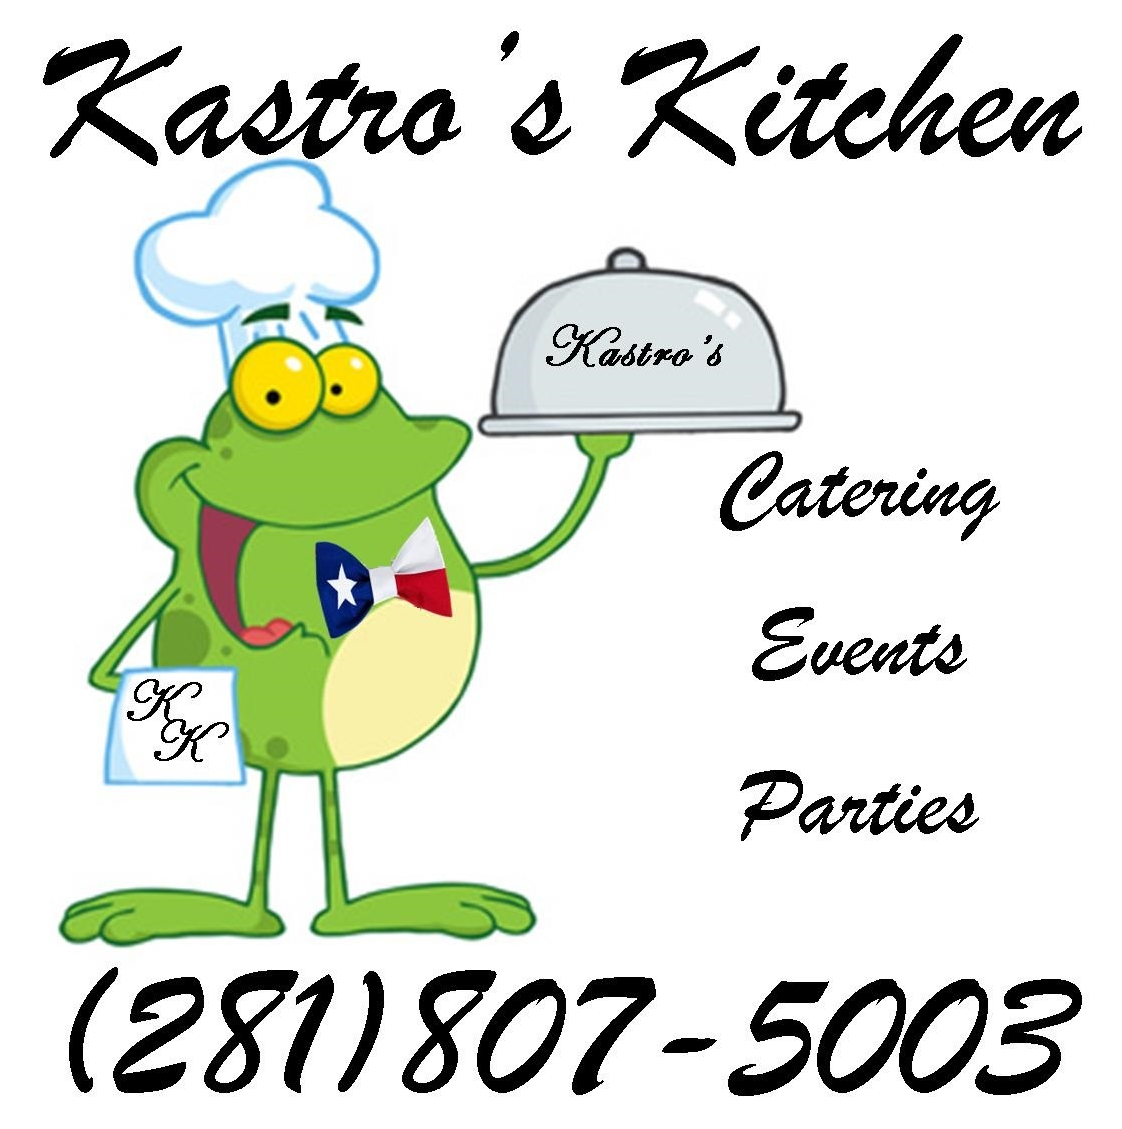 Kastro's Kitchen